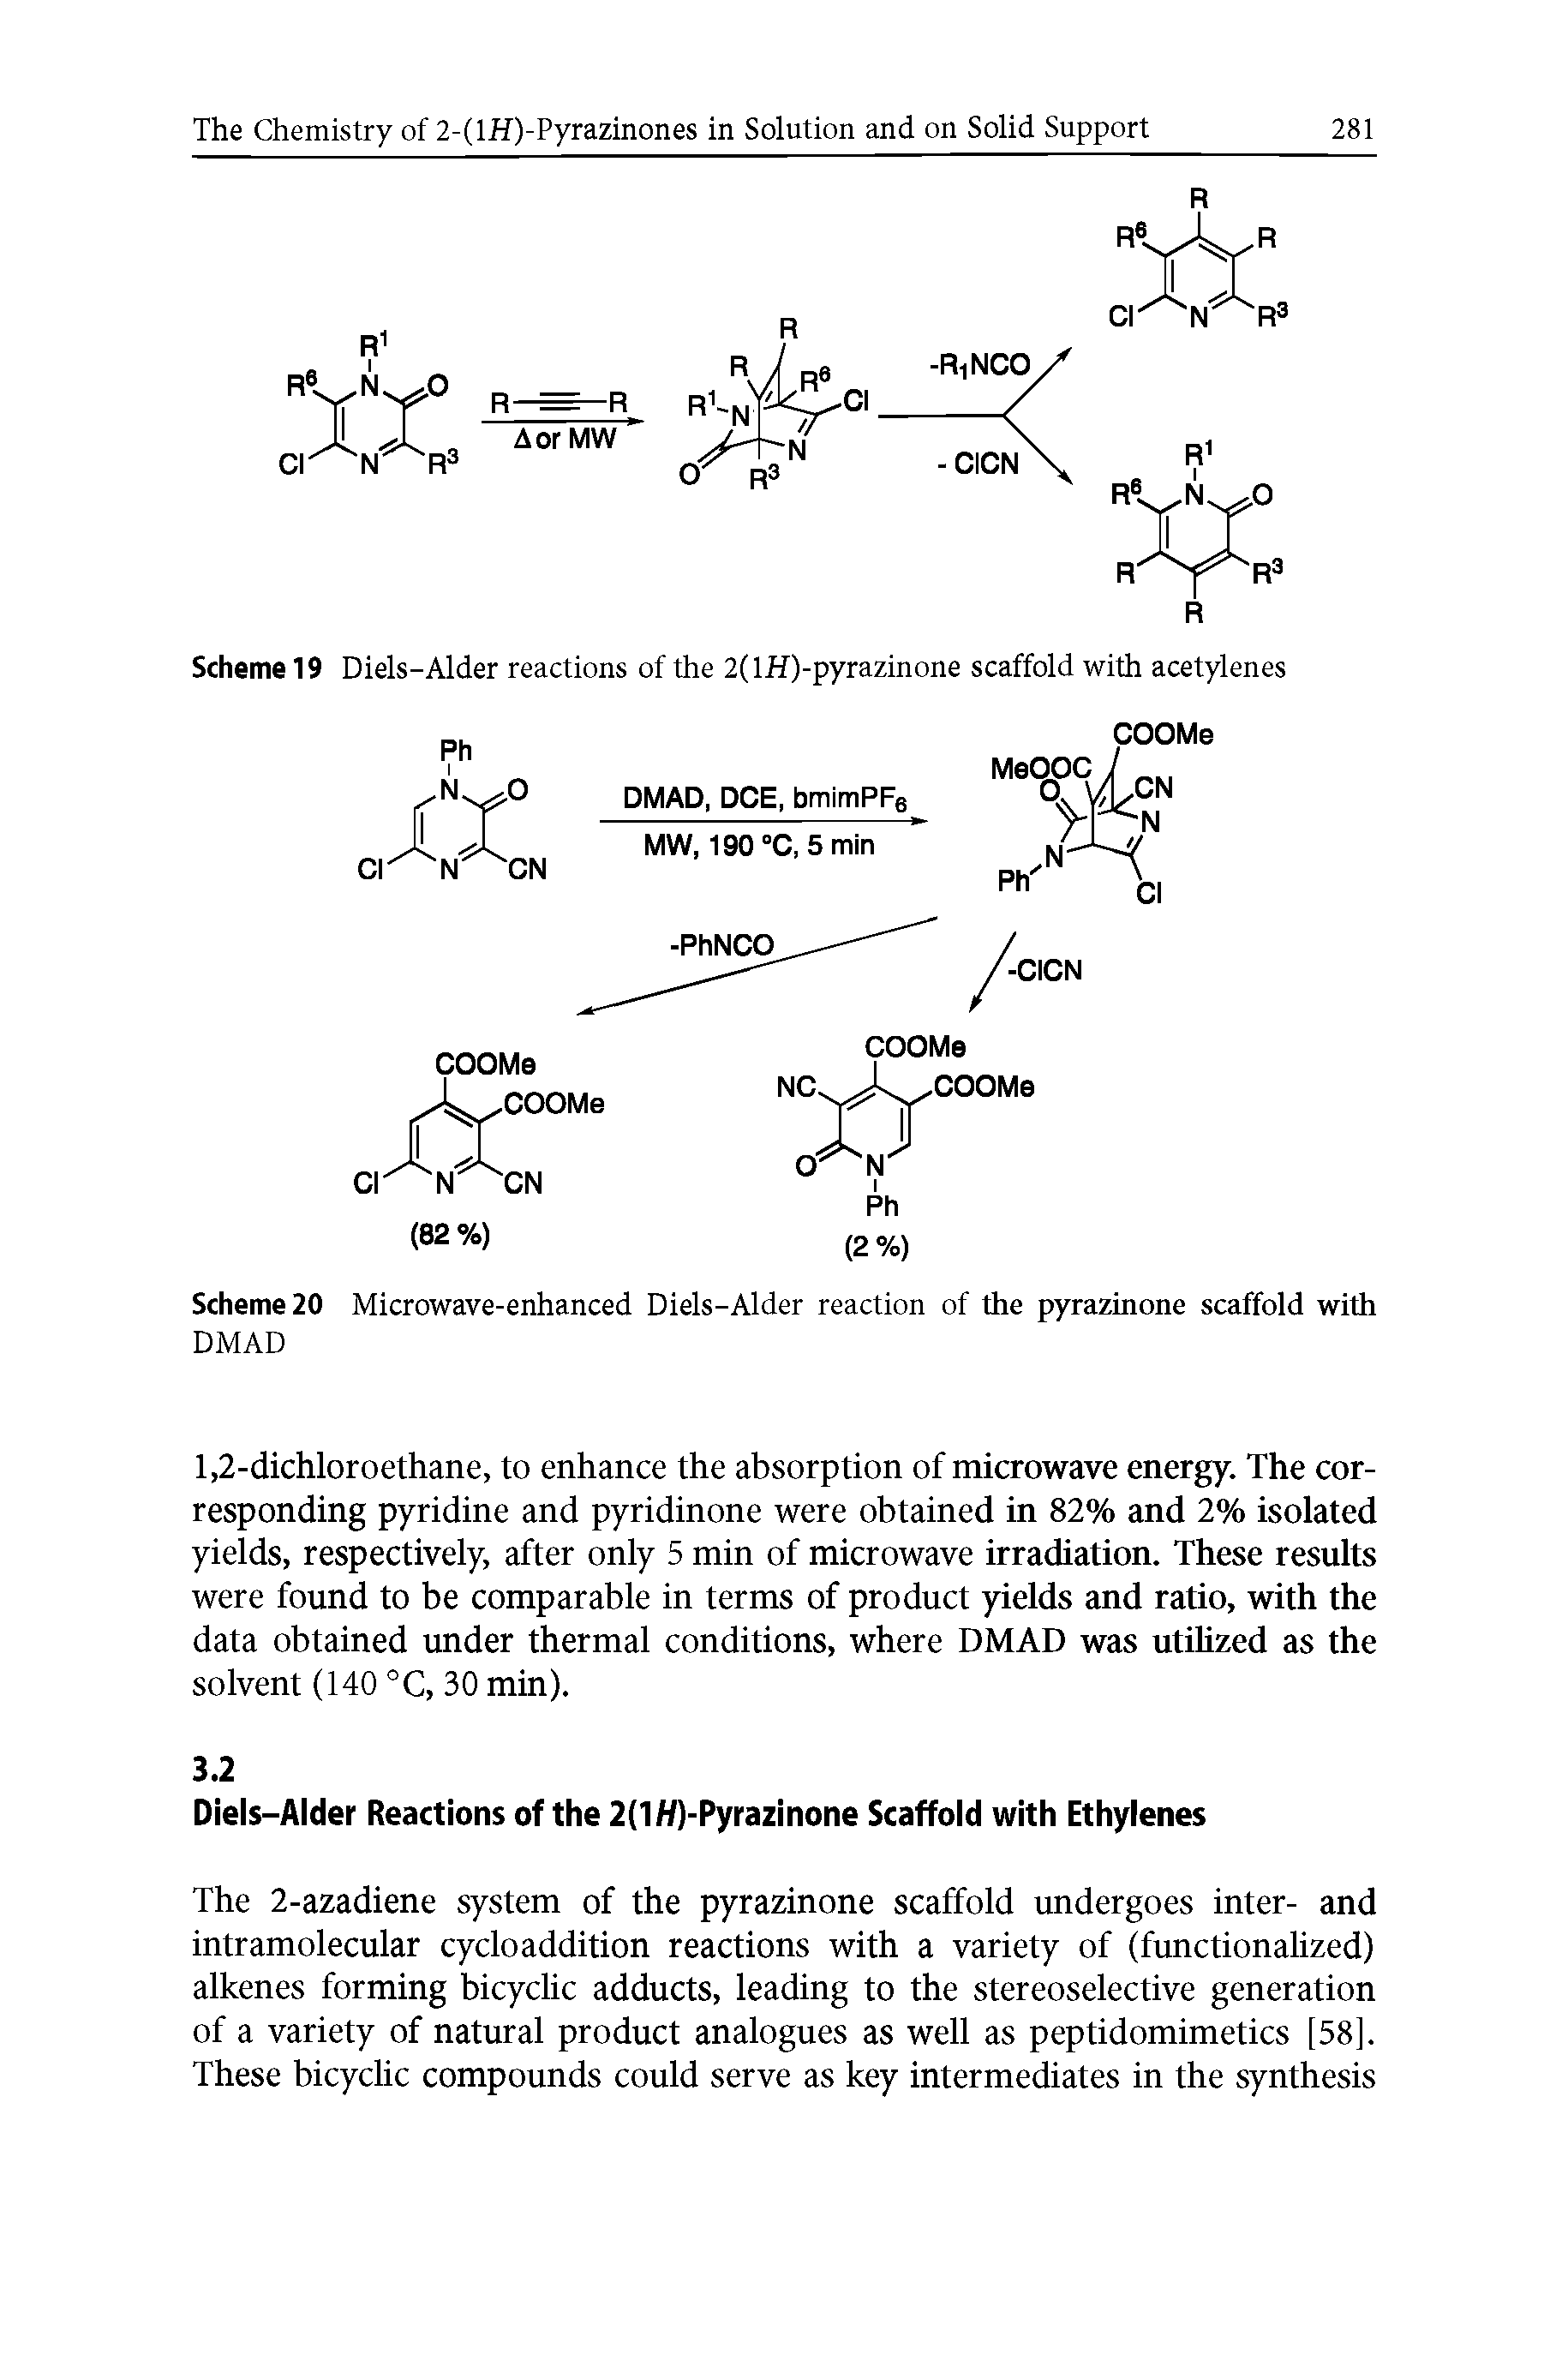 Scheme 19 Diels-Alder reactions of the 2(lH)-pyrazinone scaffold with acetylenes...